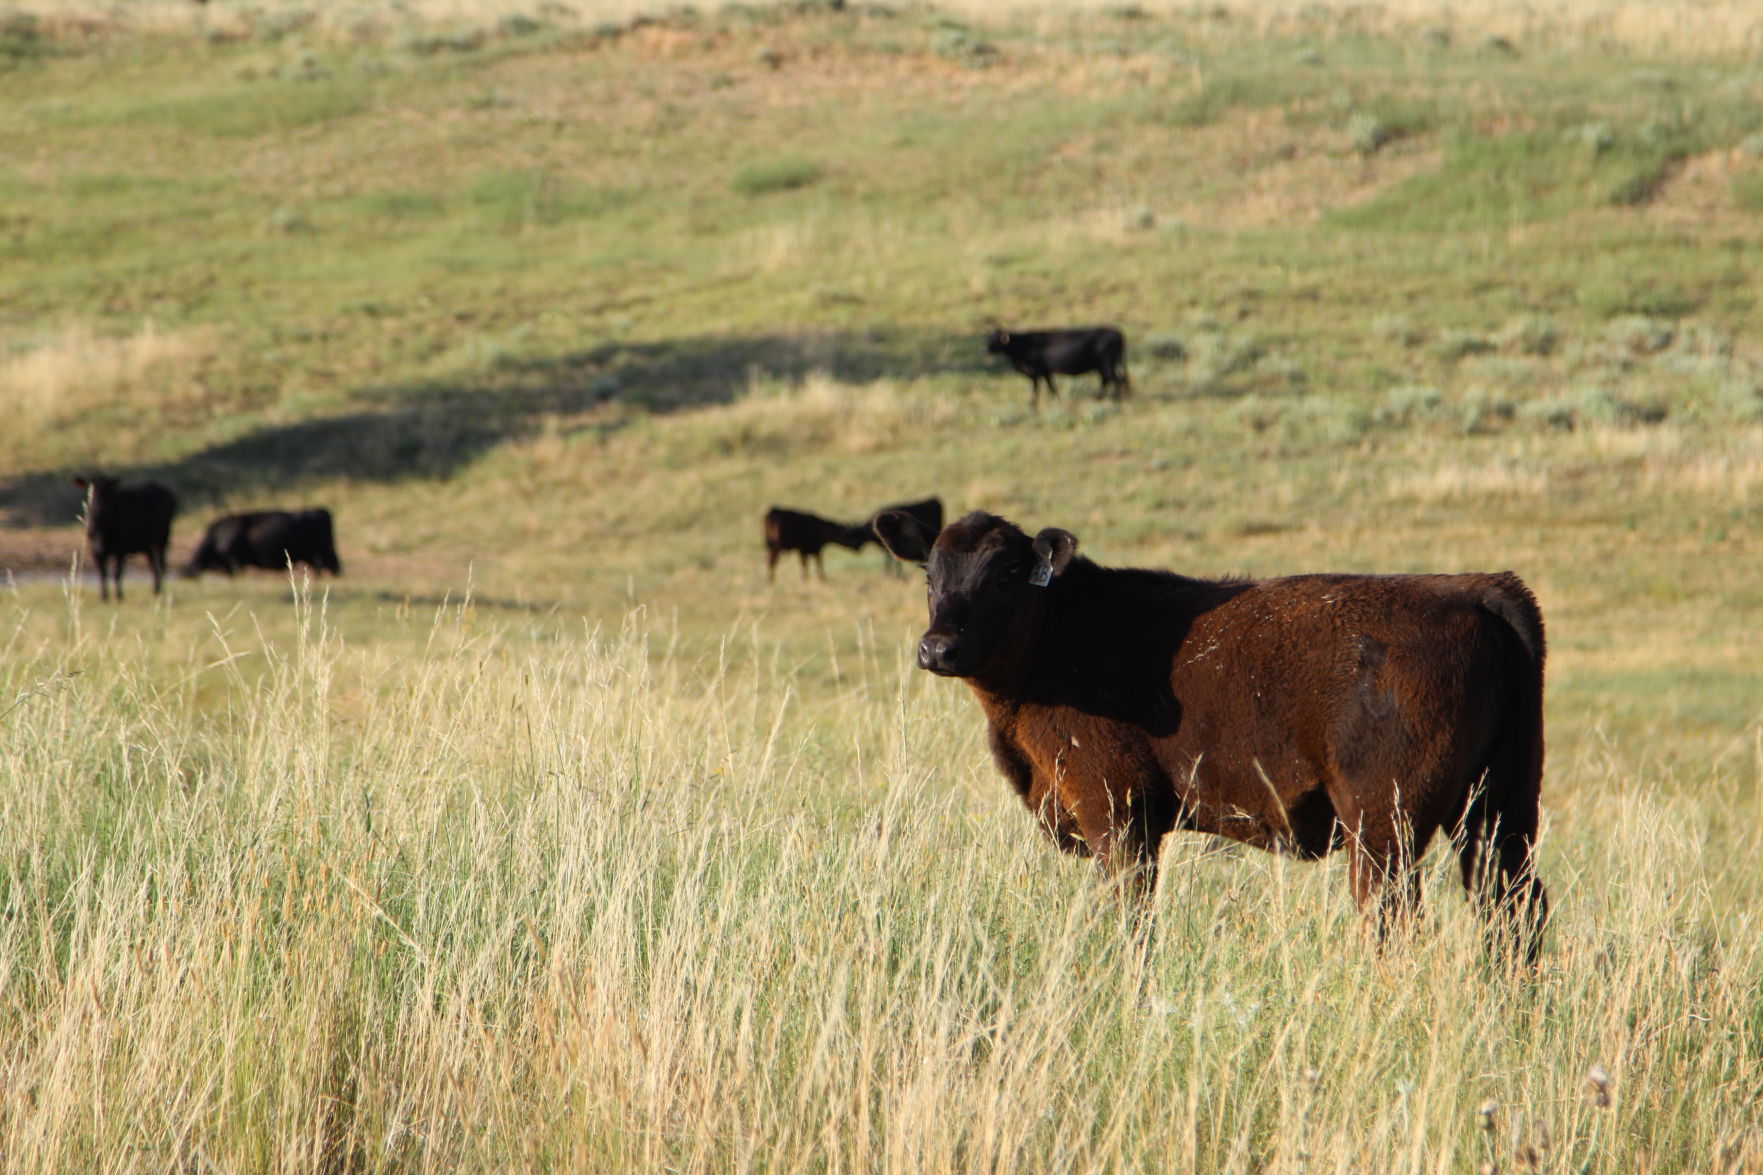 Calves (Journal photo by Jennifer M. Latzke)